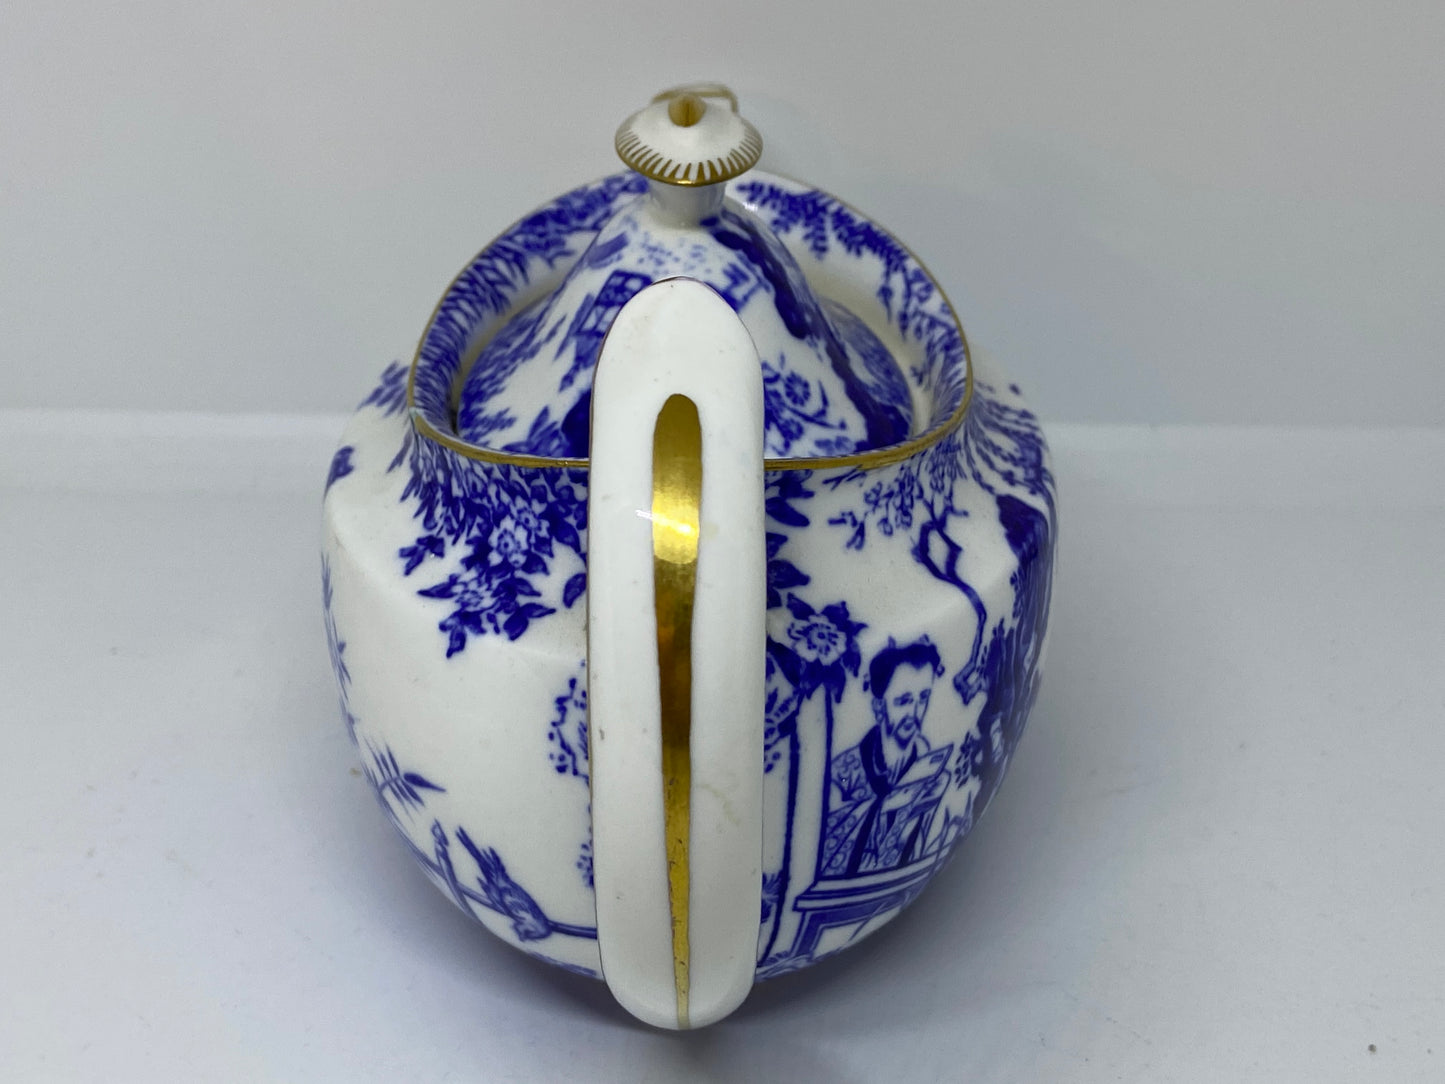 Antique Royal Crown Derby Mikado Teapot 1930